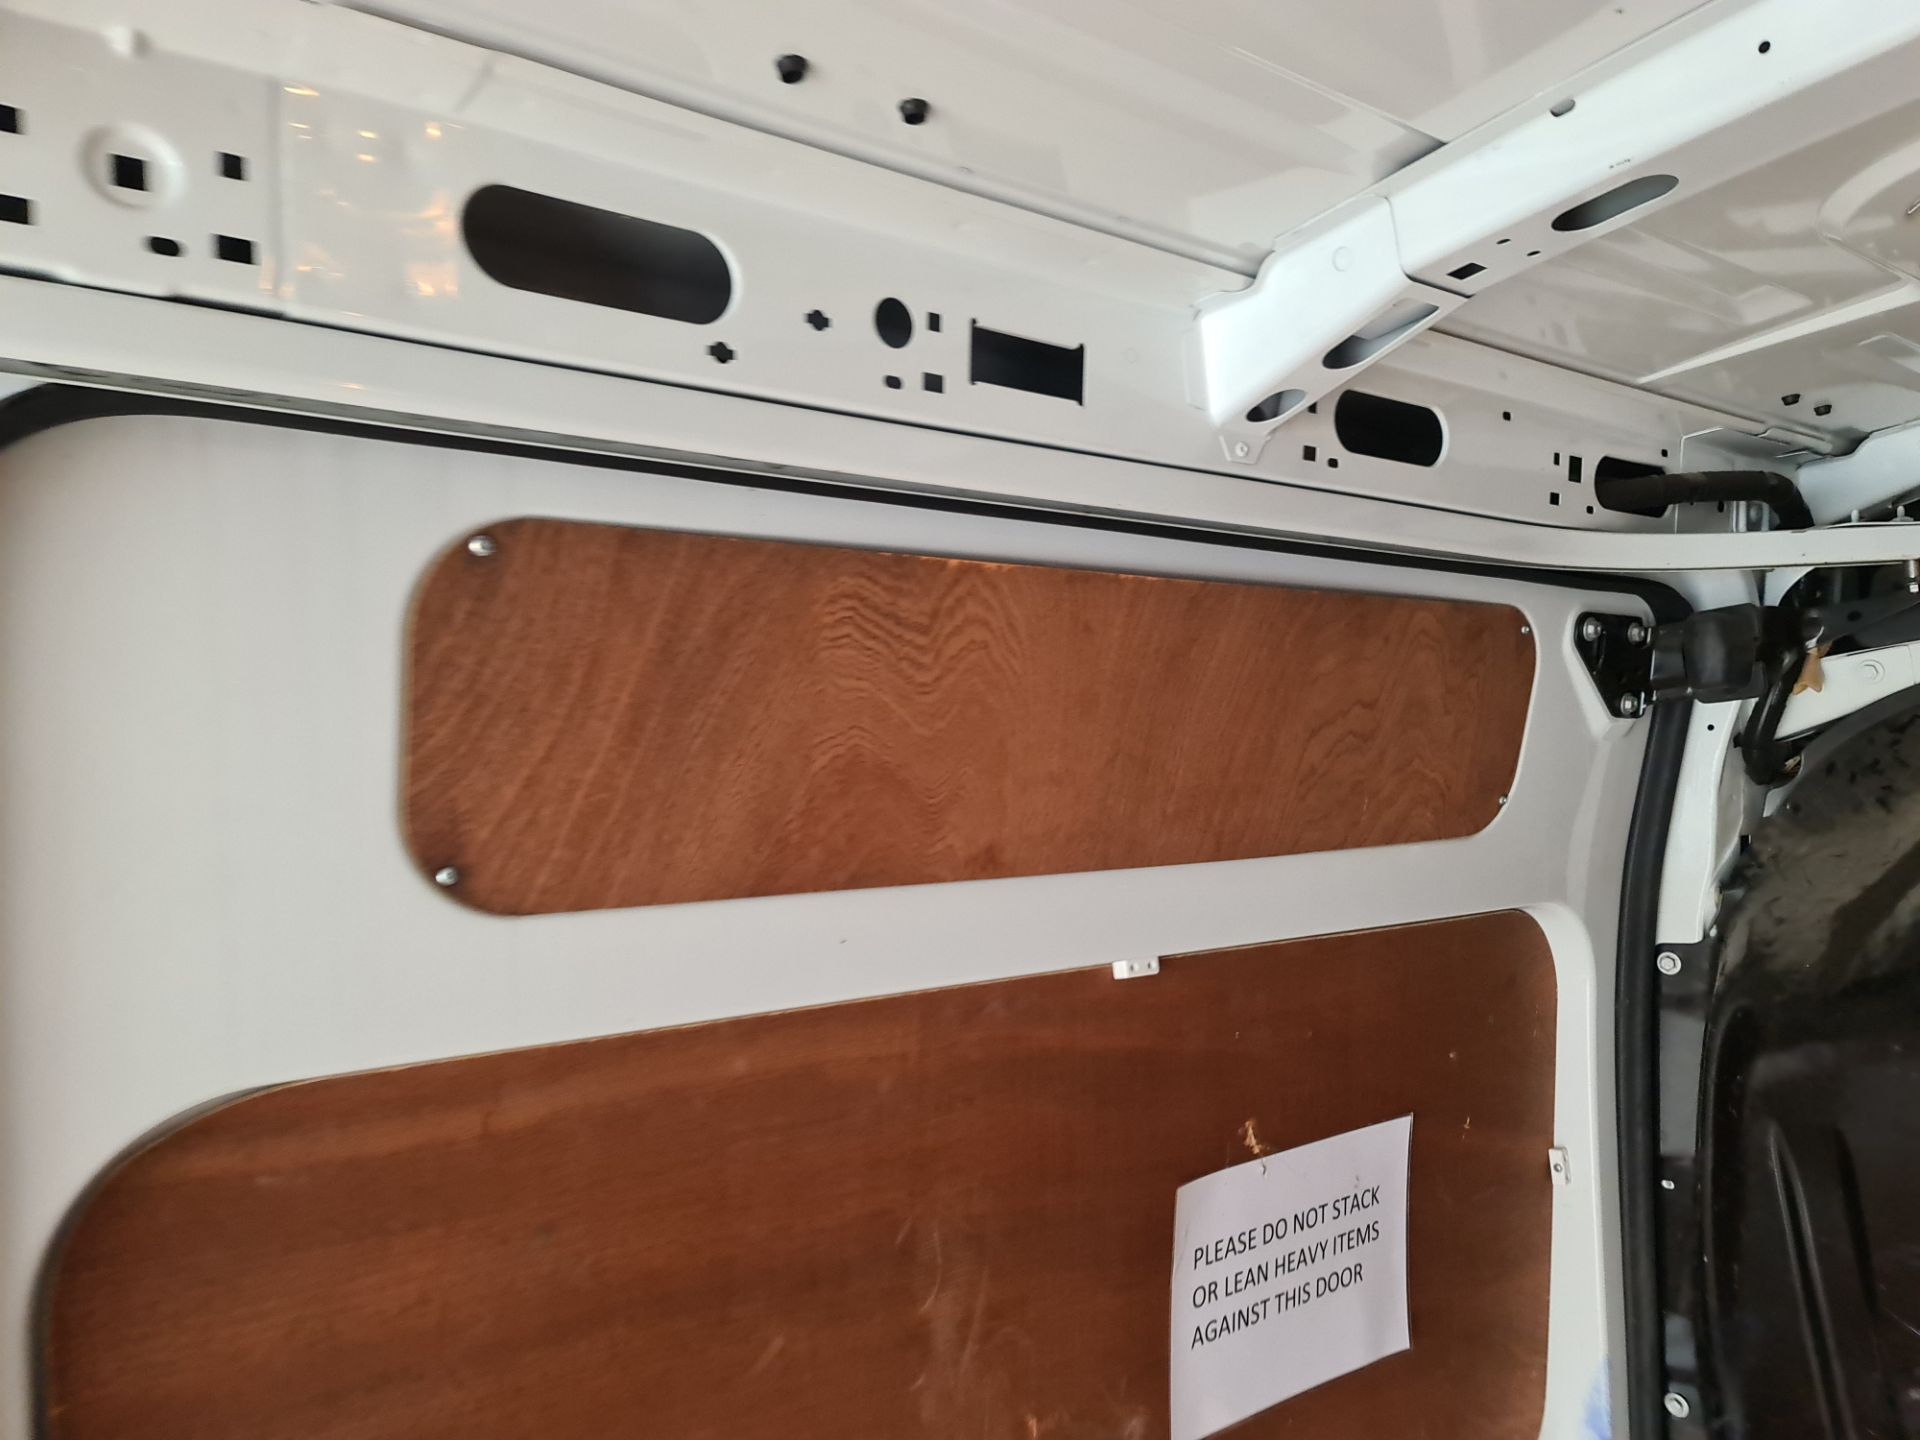 2015 Nissan NV400 SE DCI panel van - Image 45 of 74